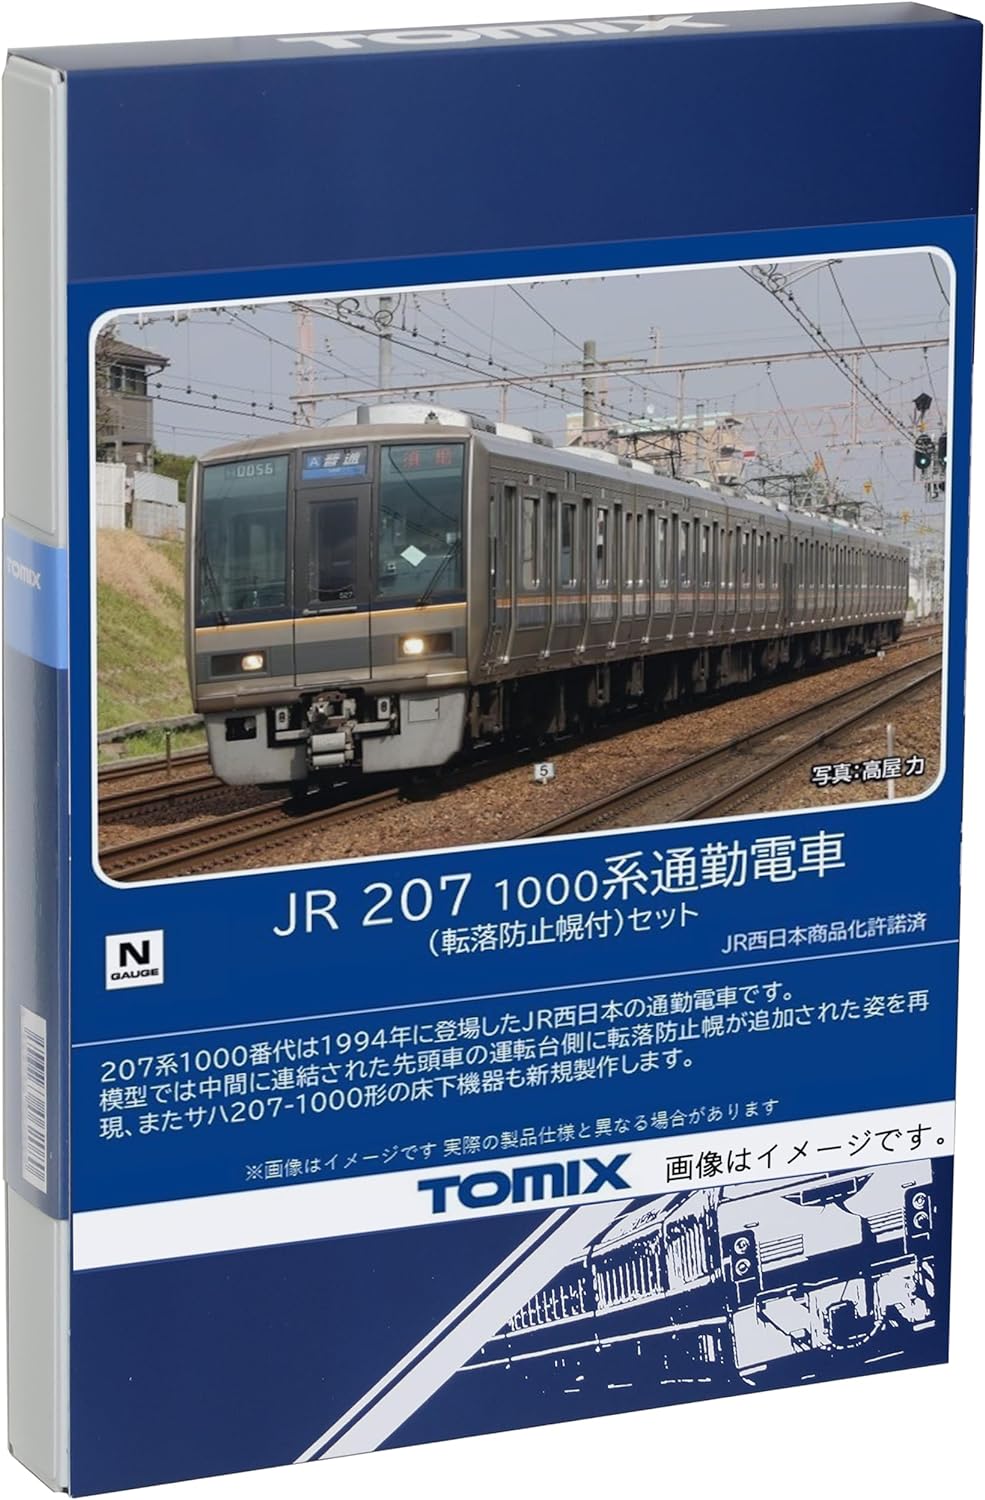 TOMIX 98837 N Gauge JR 207 1000 Series Fall Prevention Cape Set, Railway  Model Train